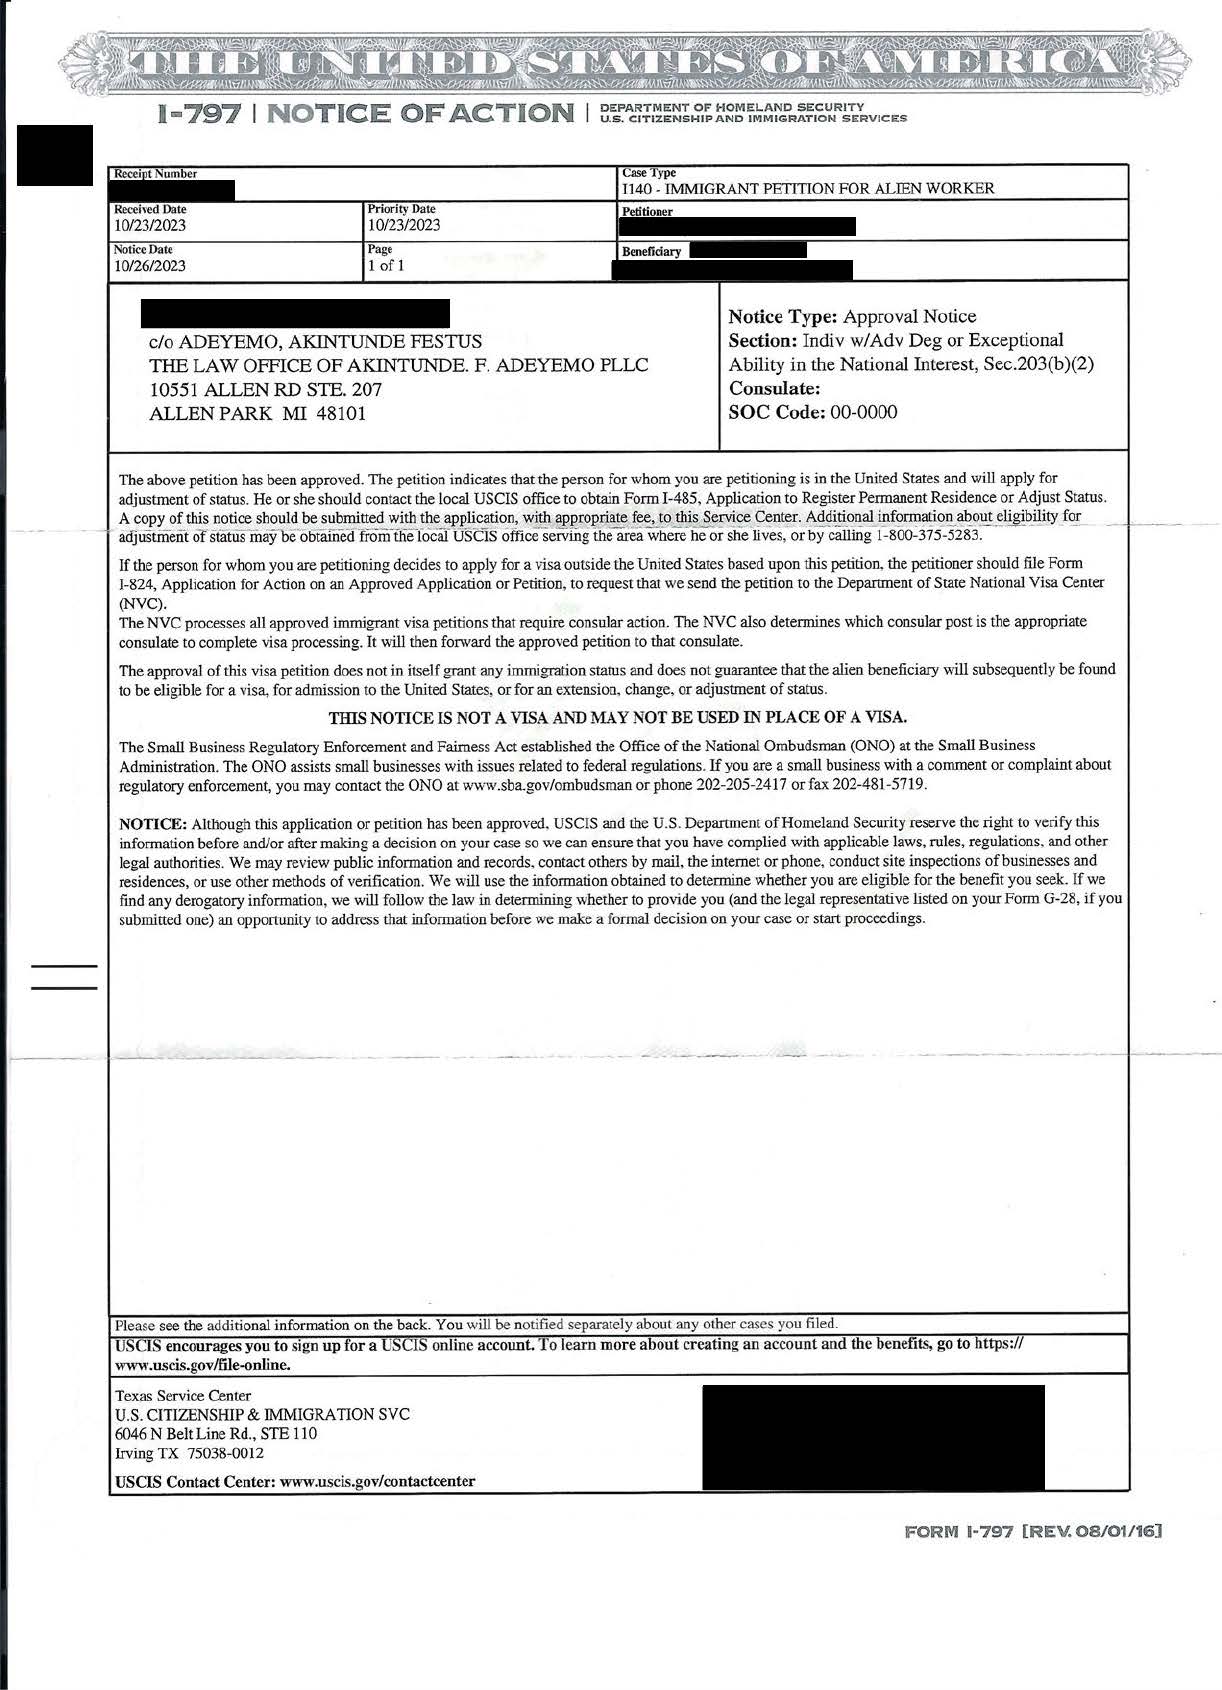 EB2 NIW - I-485 filed 04/22/2022, approved 07/22/2022 : r/USCIS